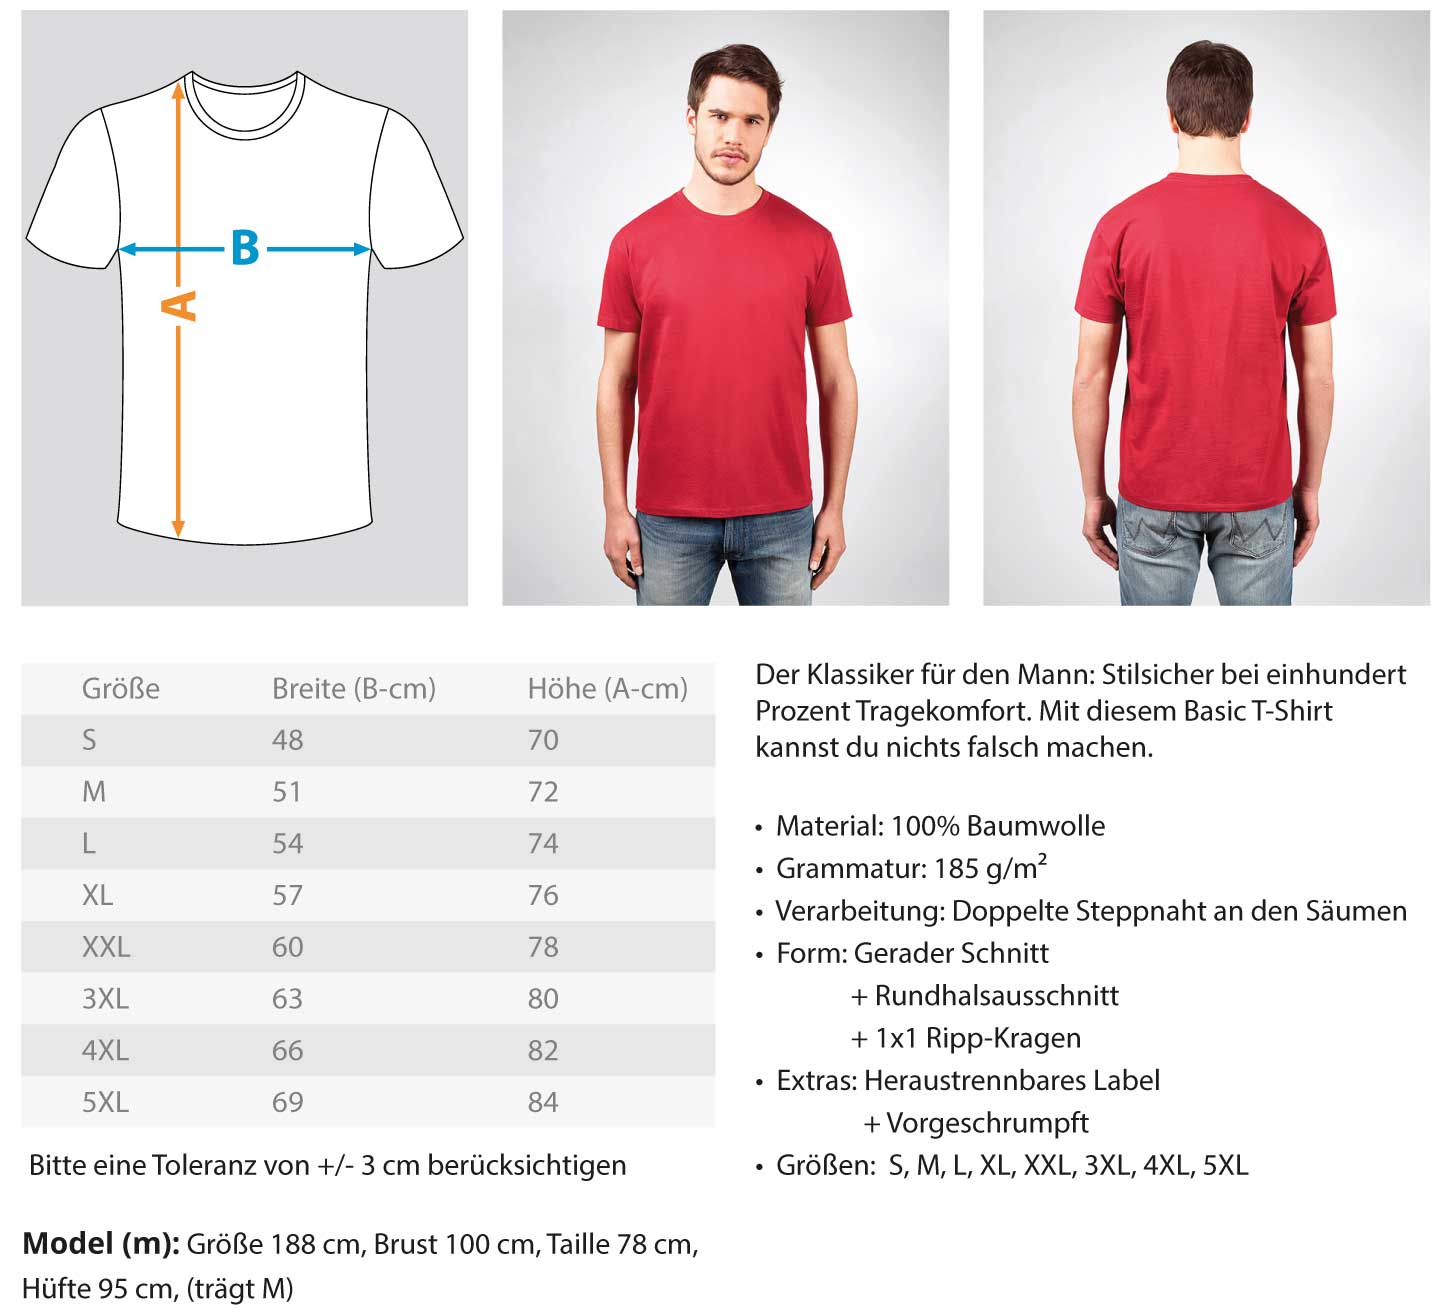 Fliesenleger - Herren Shirt €24.95 Gerüstbauer - Shop >>